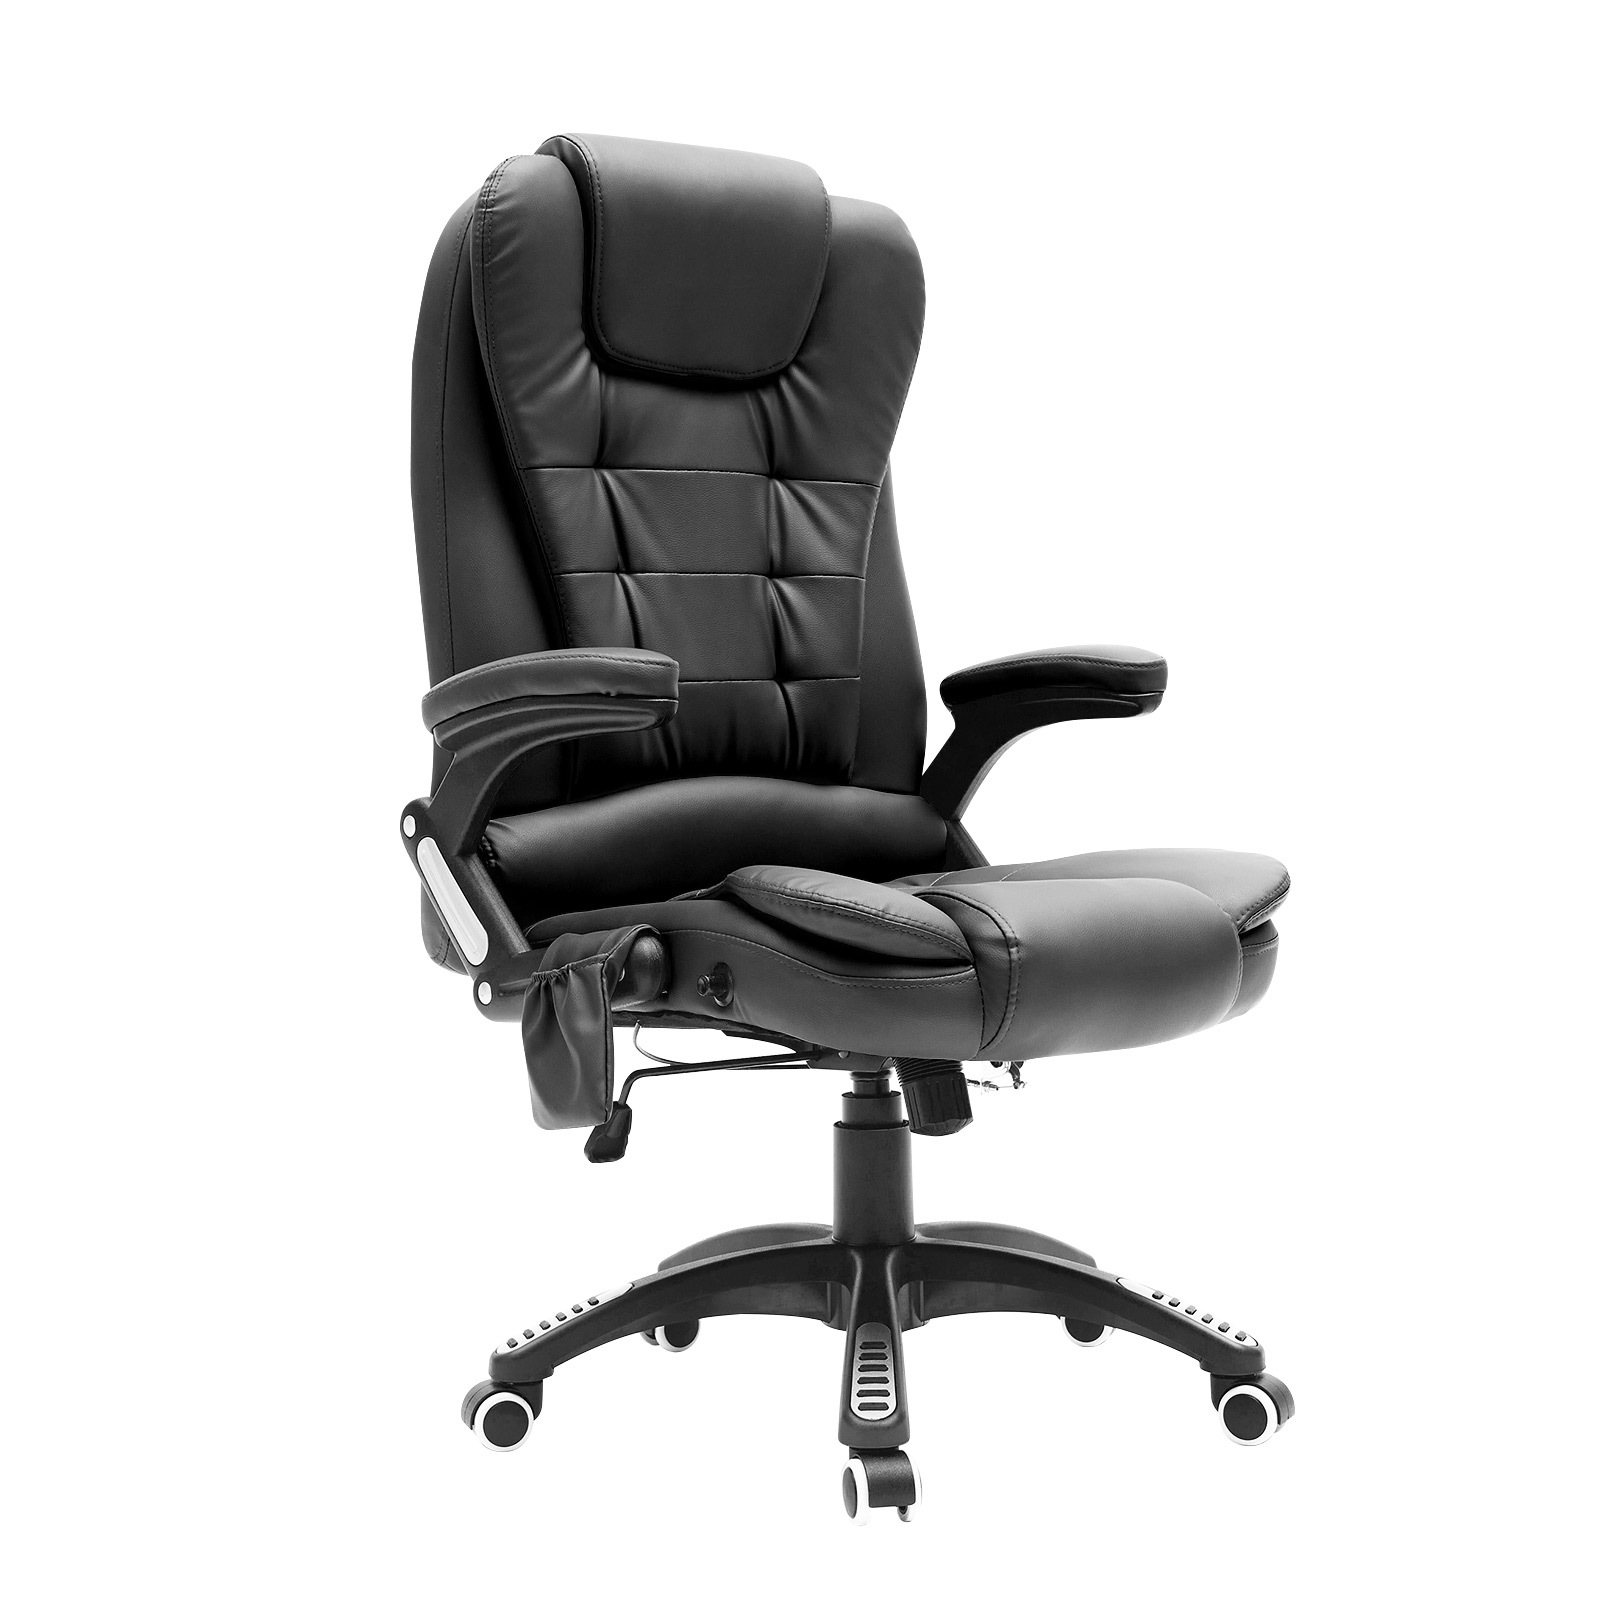 Massage Office Chair 8 Points - BLACK